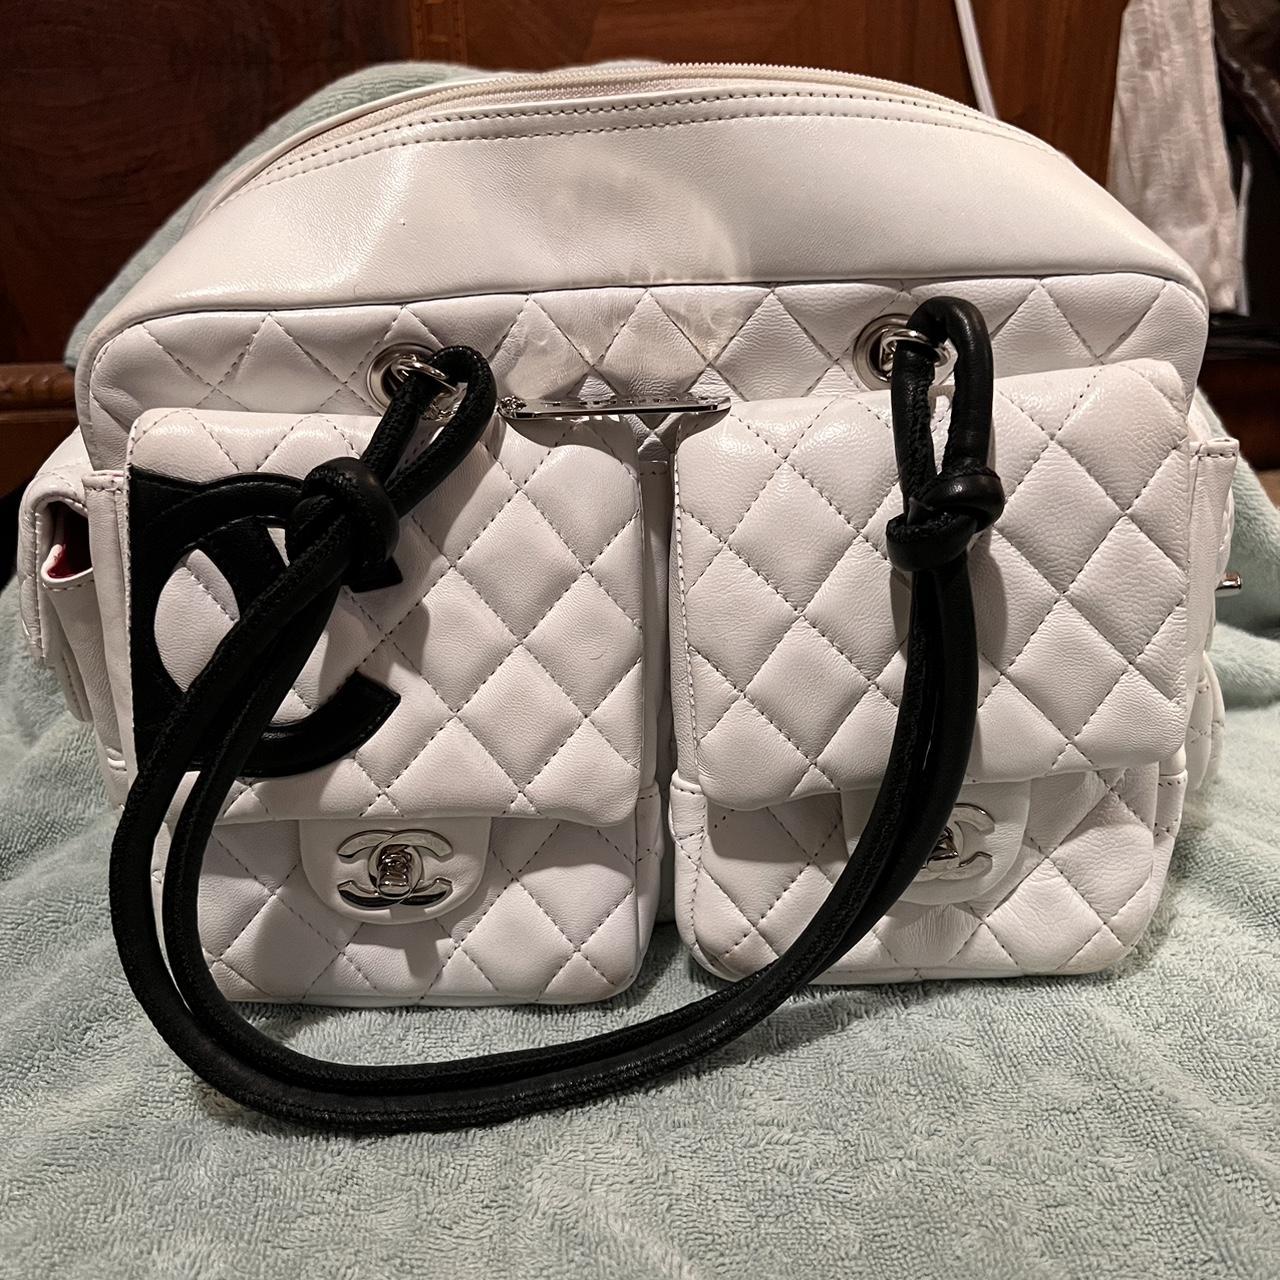 Large Chanel Handbag - Black & White with dog tag - Depop